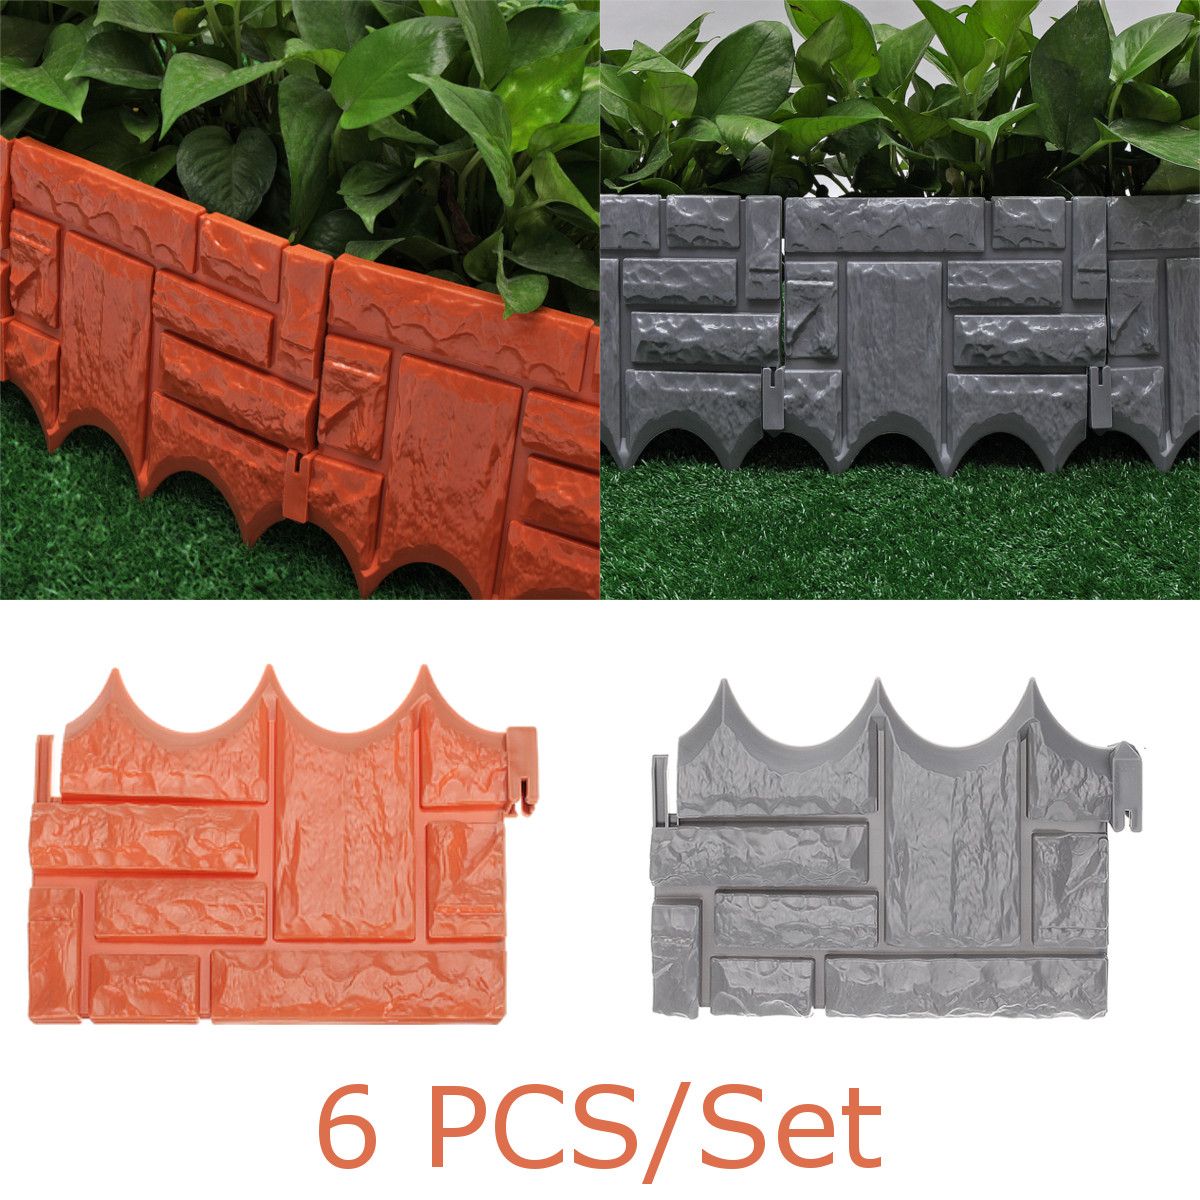 6Pcs-Plastic-Fence-Outdoor-Garden-Lawn-Edging-Yard-Plant-Border-Panel-Paths-Garden-Landscape-Decorat-1579764